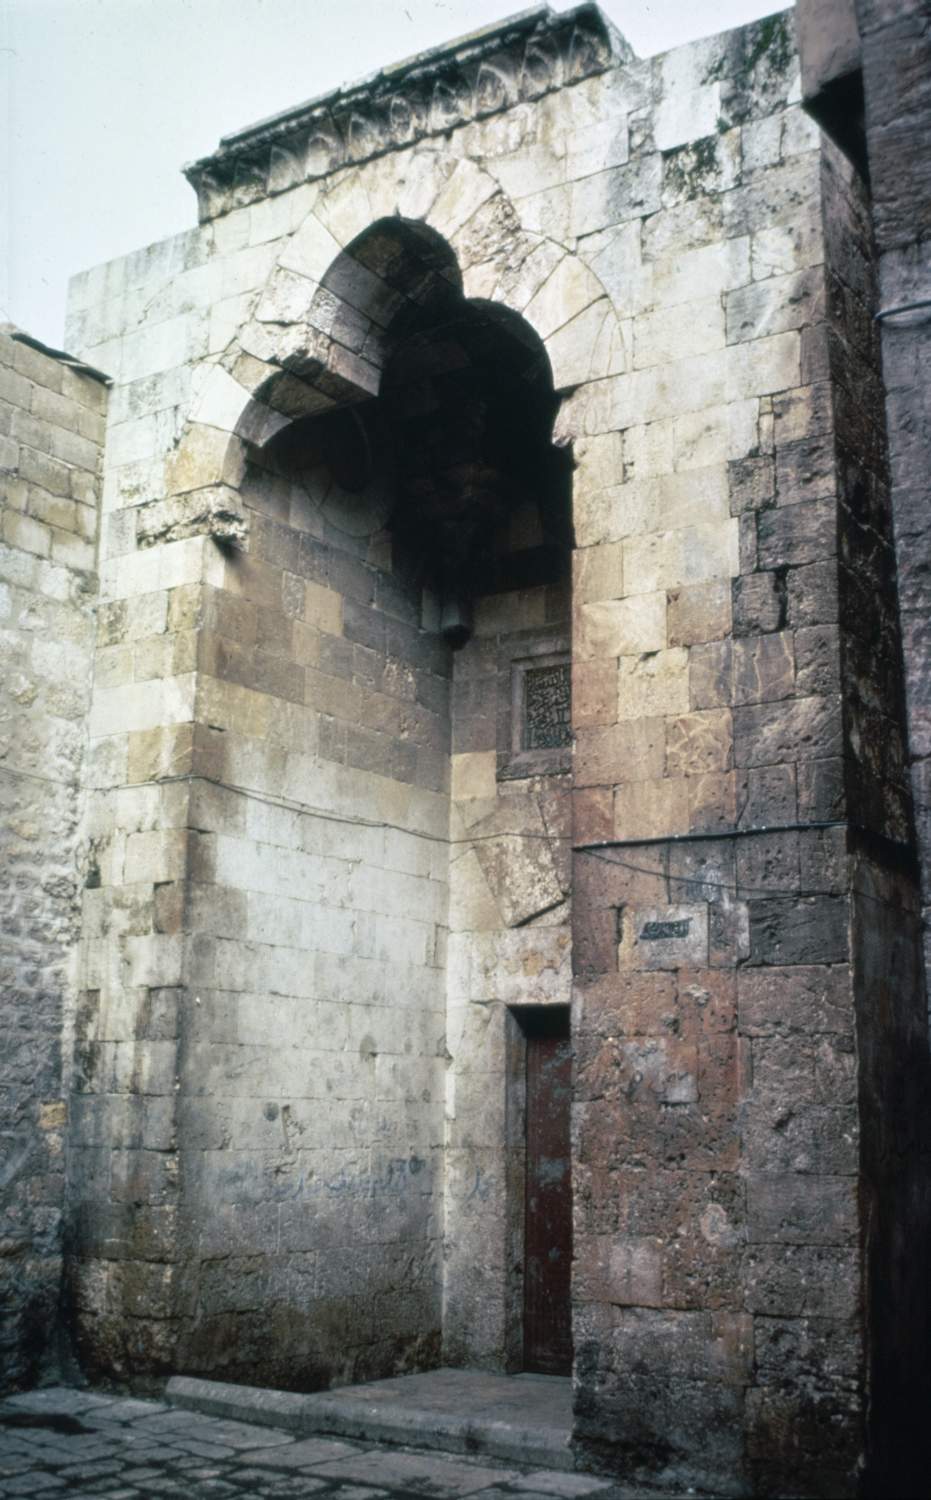 View of entrance portal.